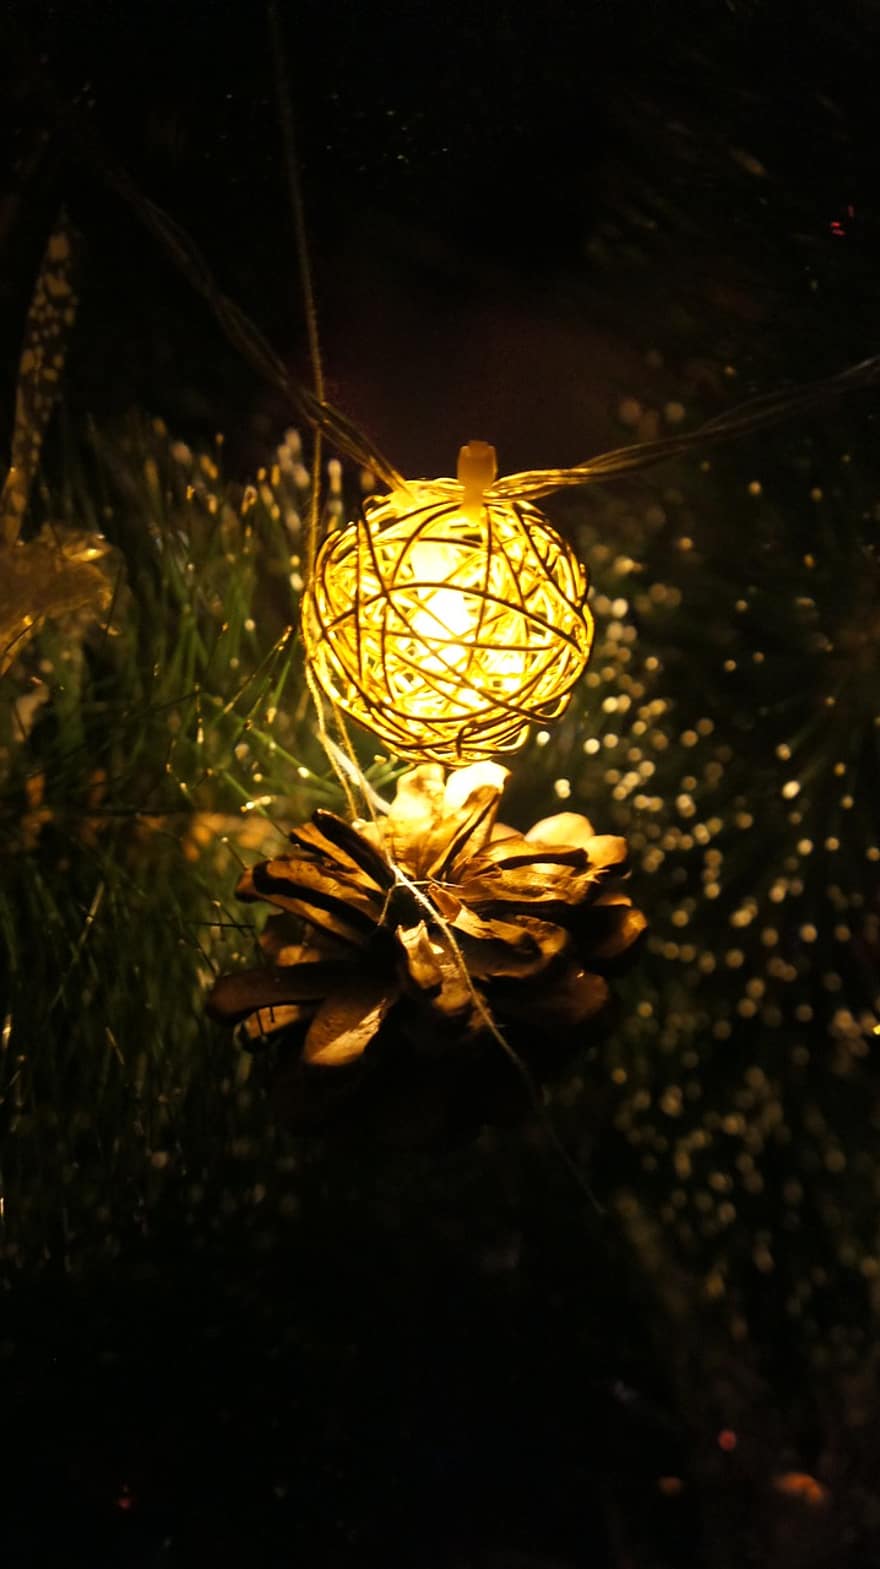 New Year, Lights, Garland, Spruce, decoration, celebration, night, backgrounds, close-up, winter, season